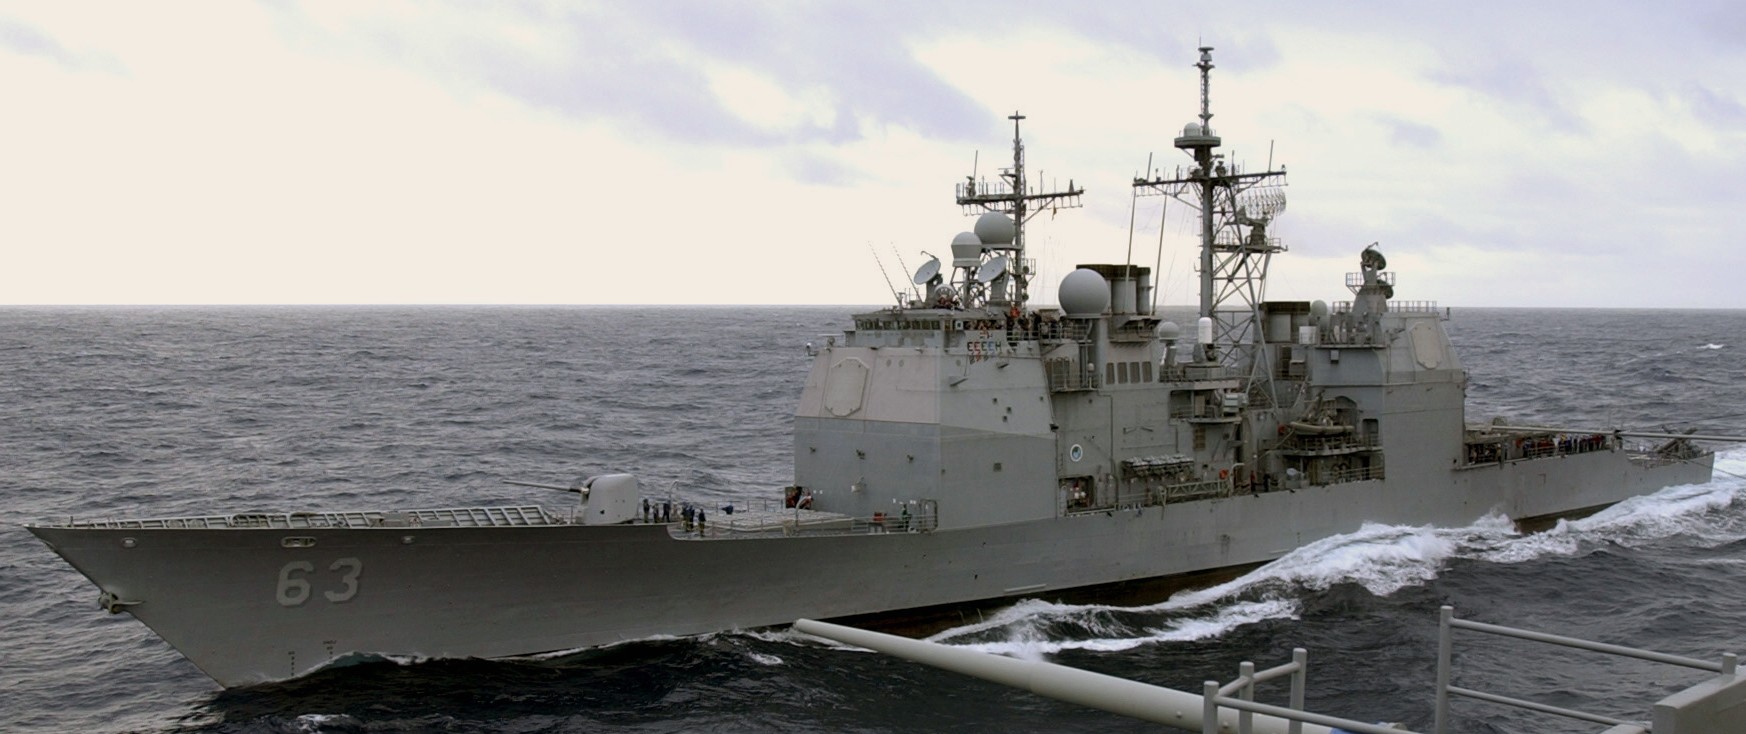 cg-63 uss cowpens ticonderoga class guided missile cruiser aegis us navy 07